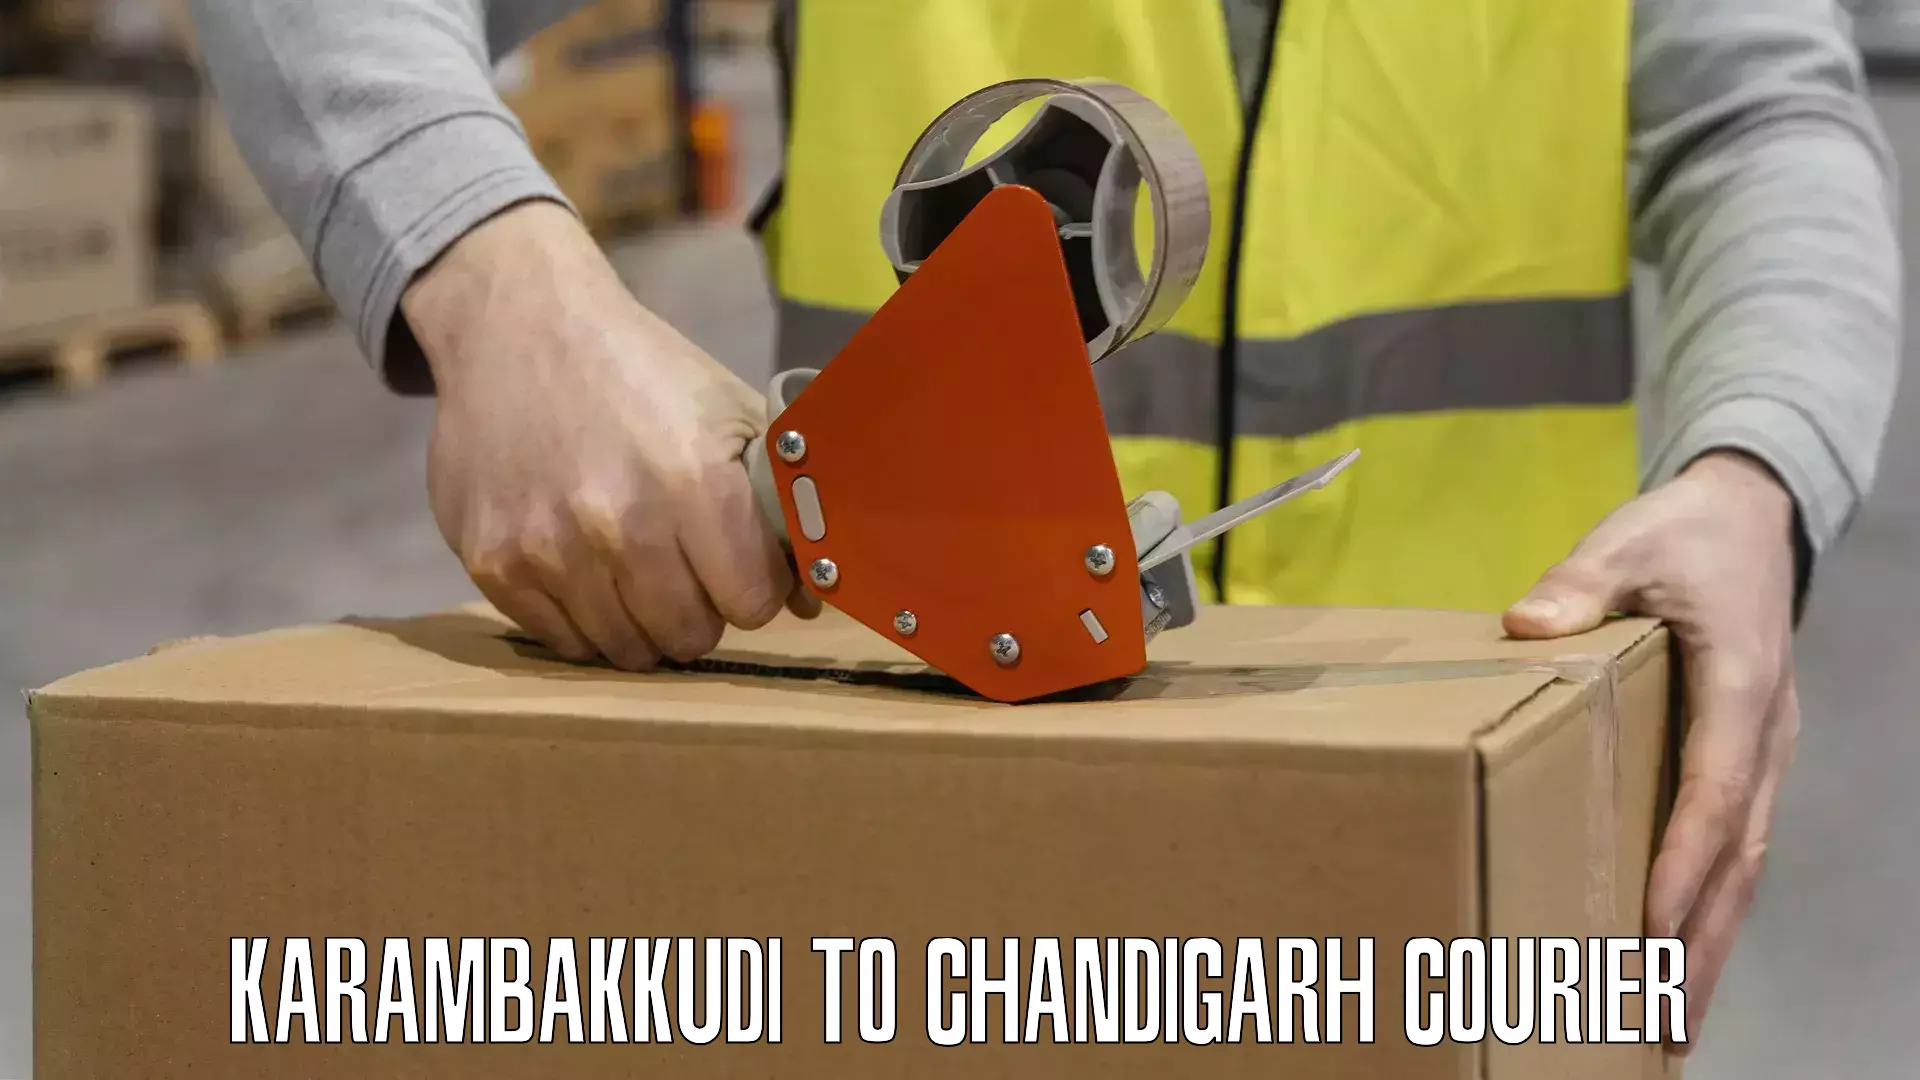 Personalized courier experiences Karambakkudi to Chandigarh